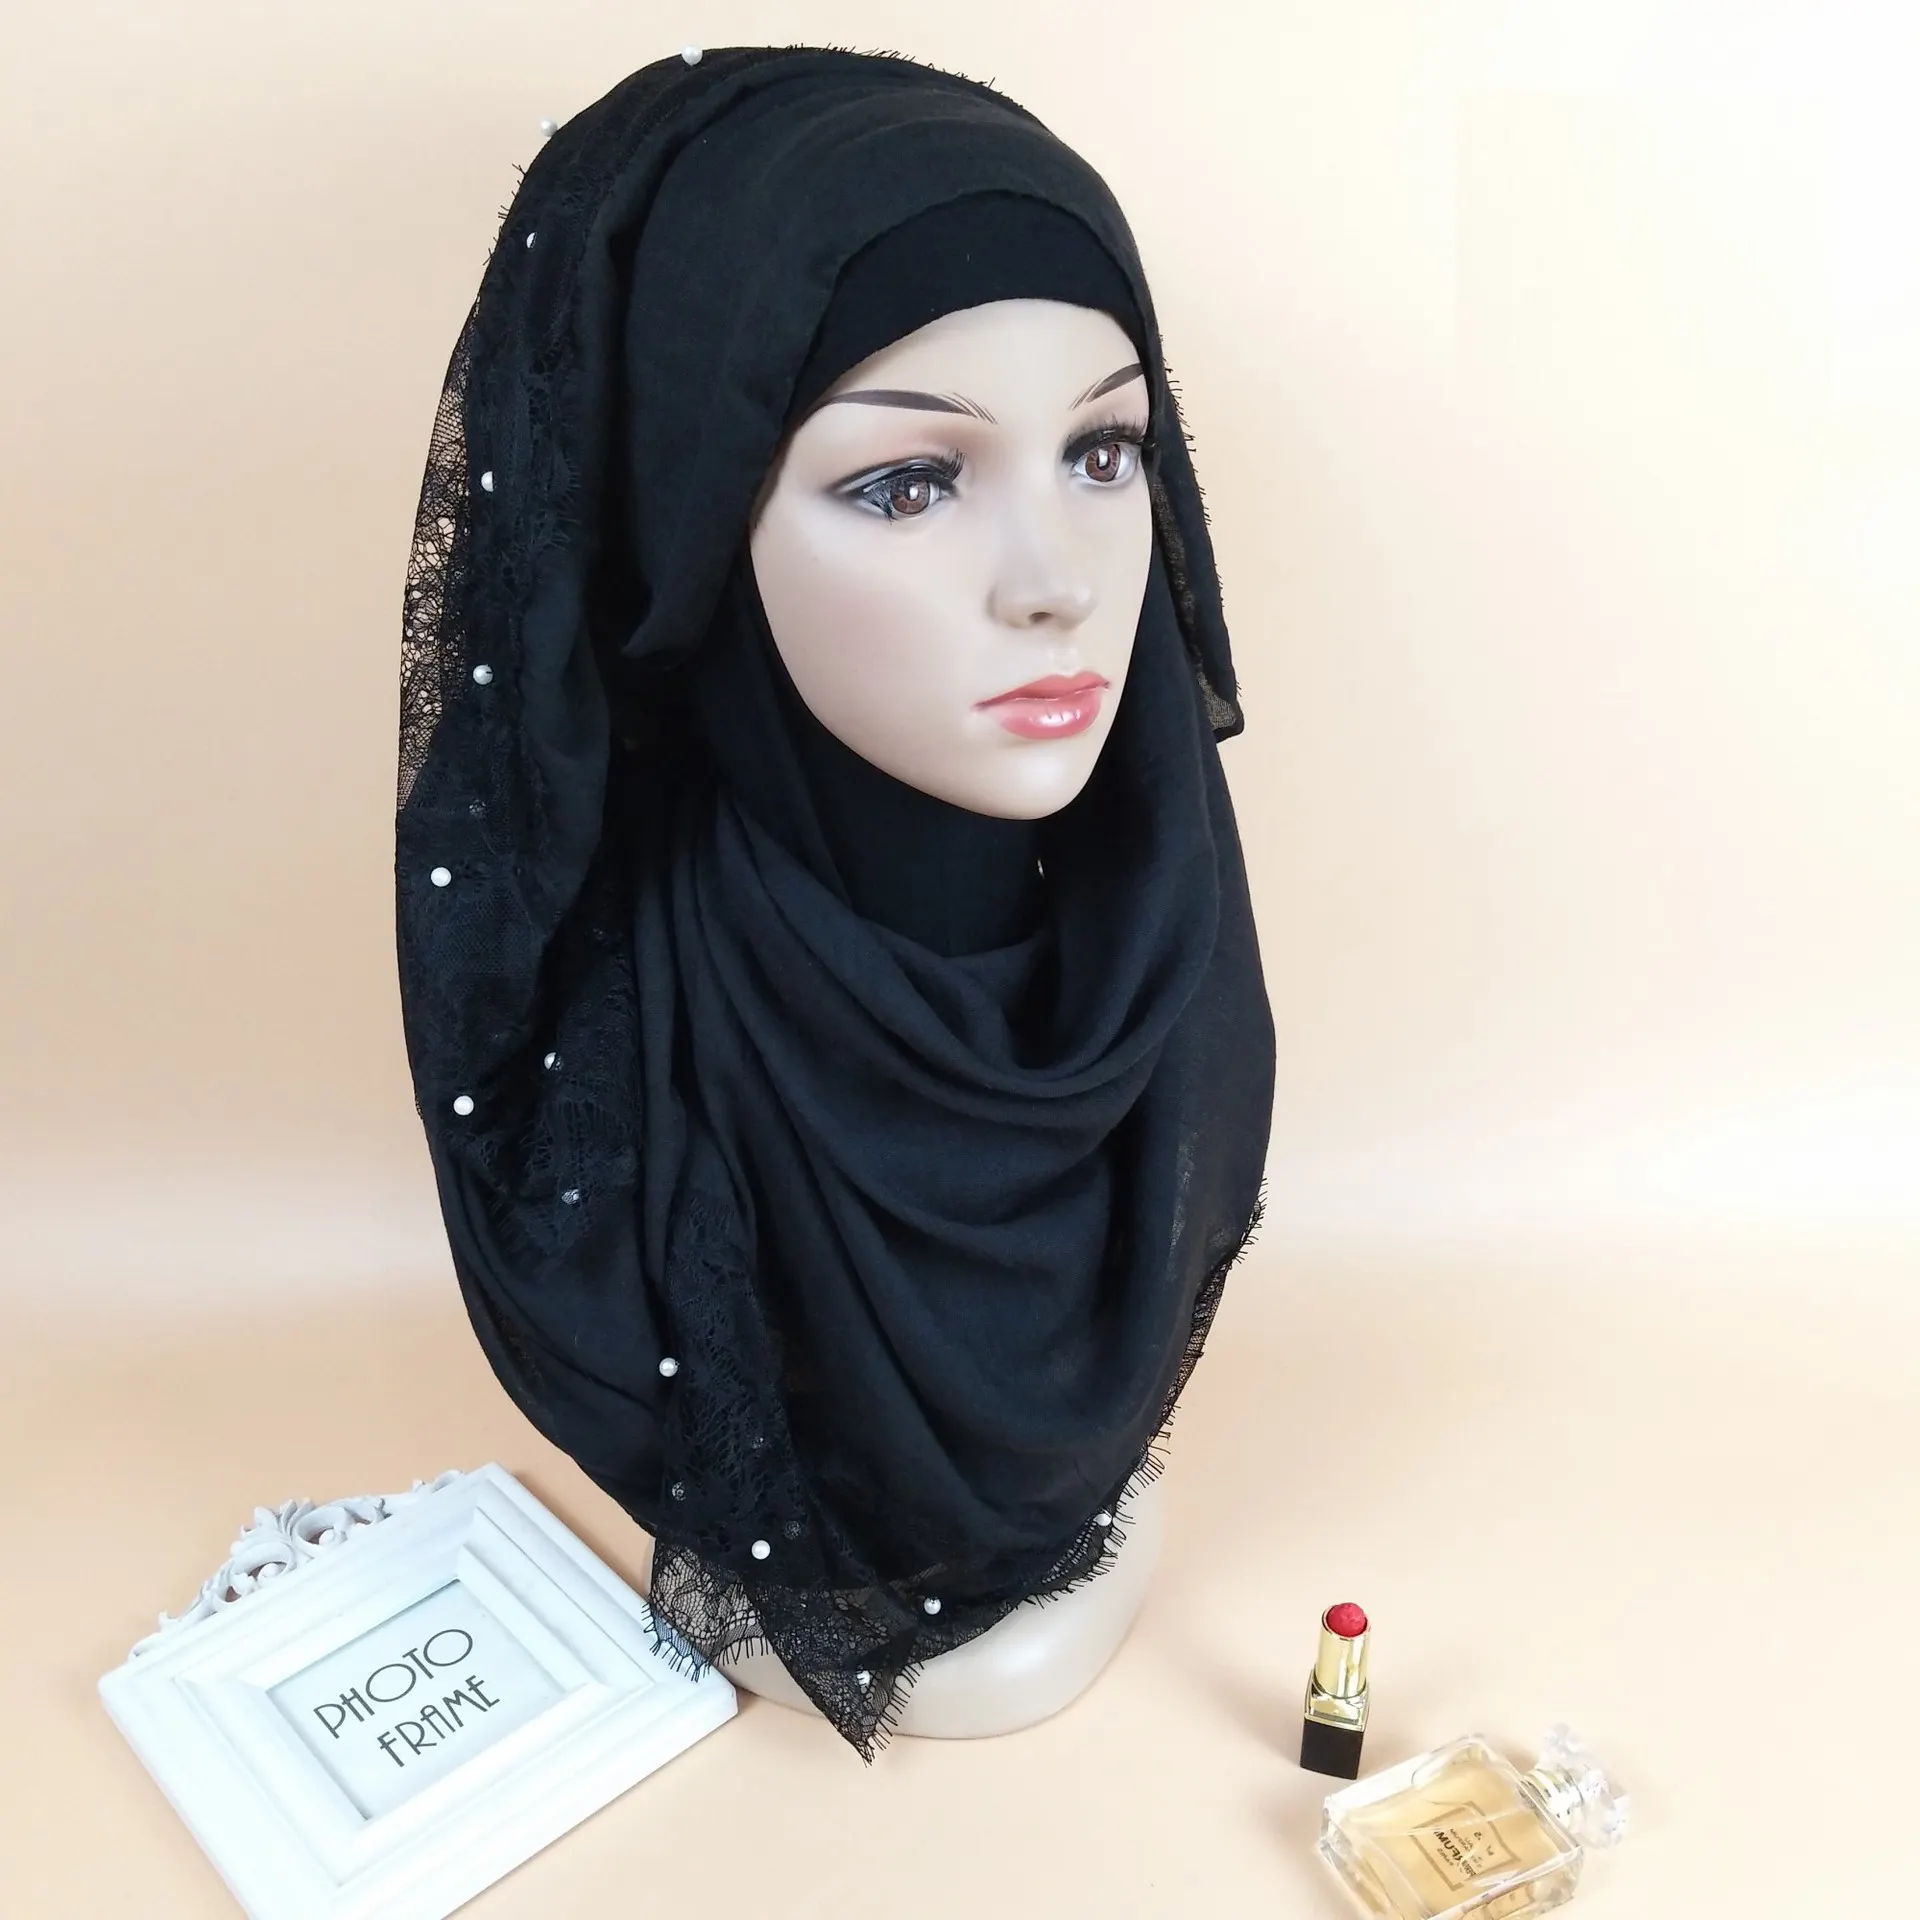 Lage MOQ voorraad mode hijab ontwerpen